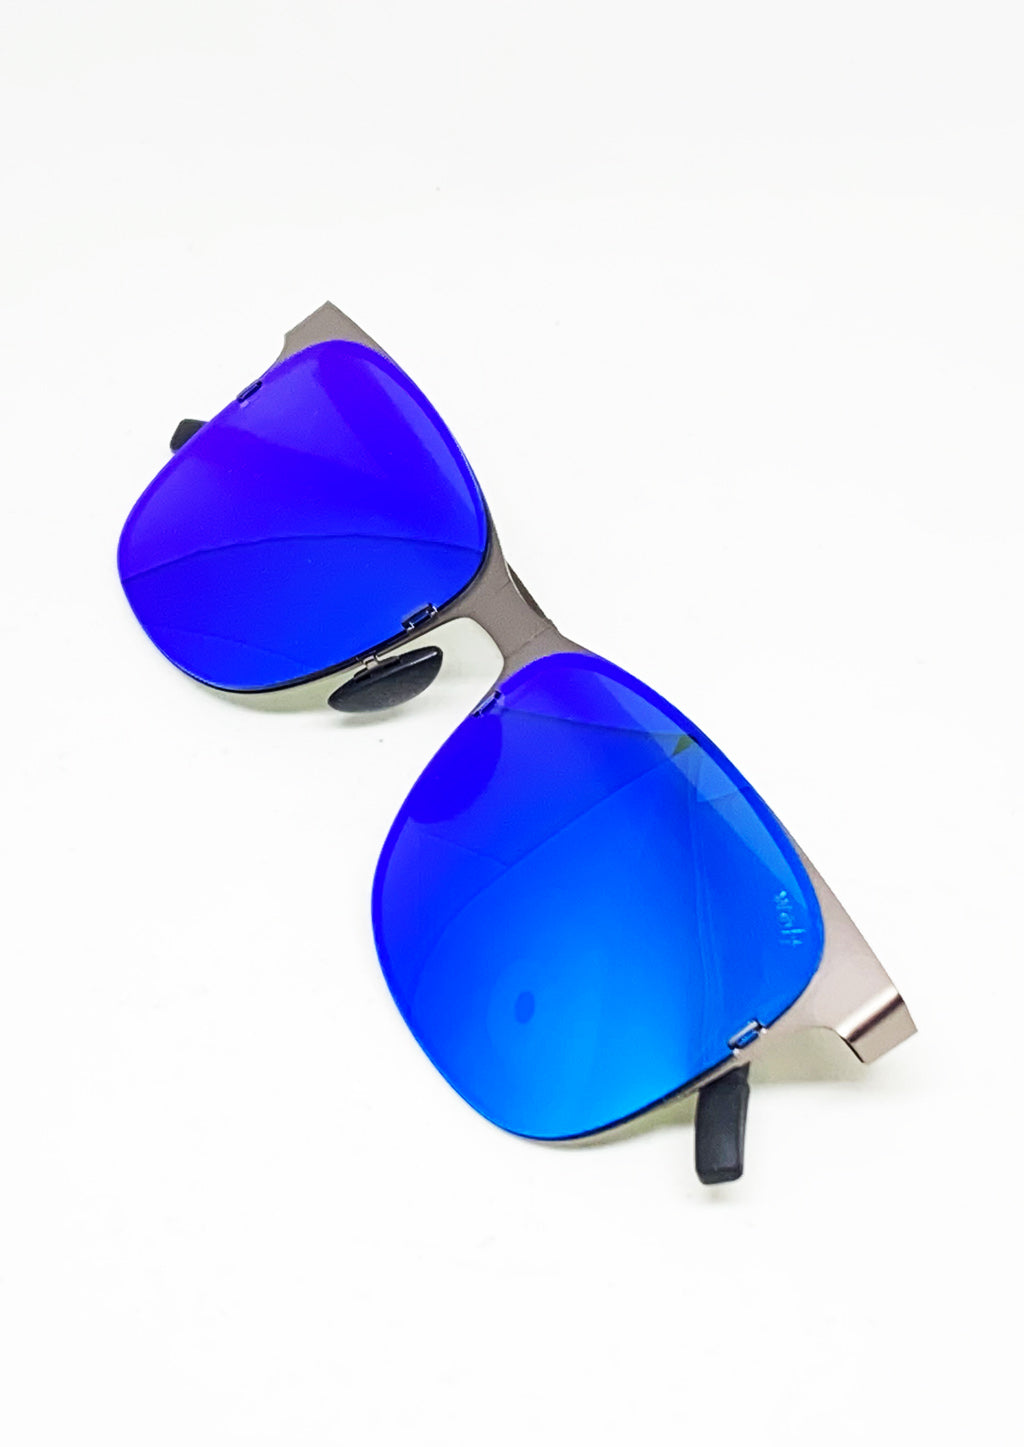 Foldable sunglasses - Rover classic wayfarer design - Laying down.